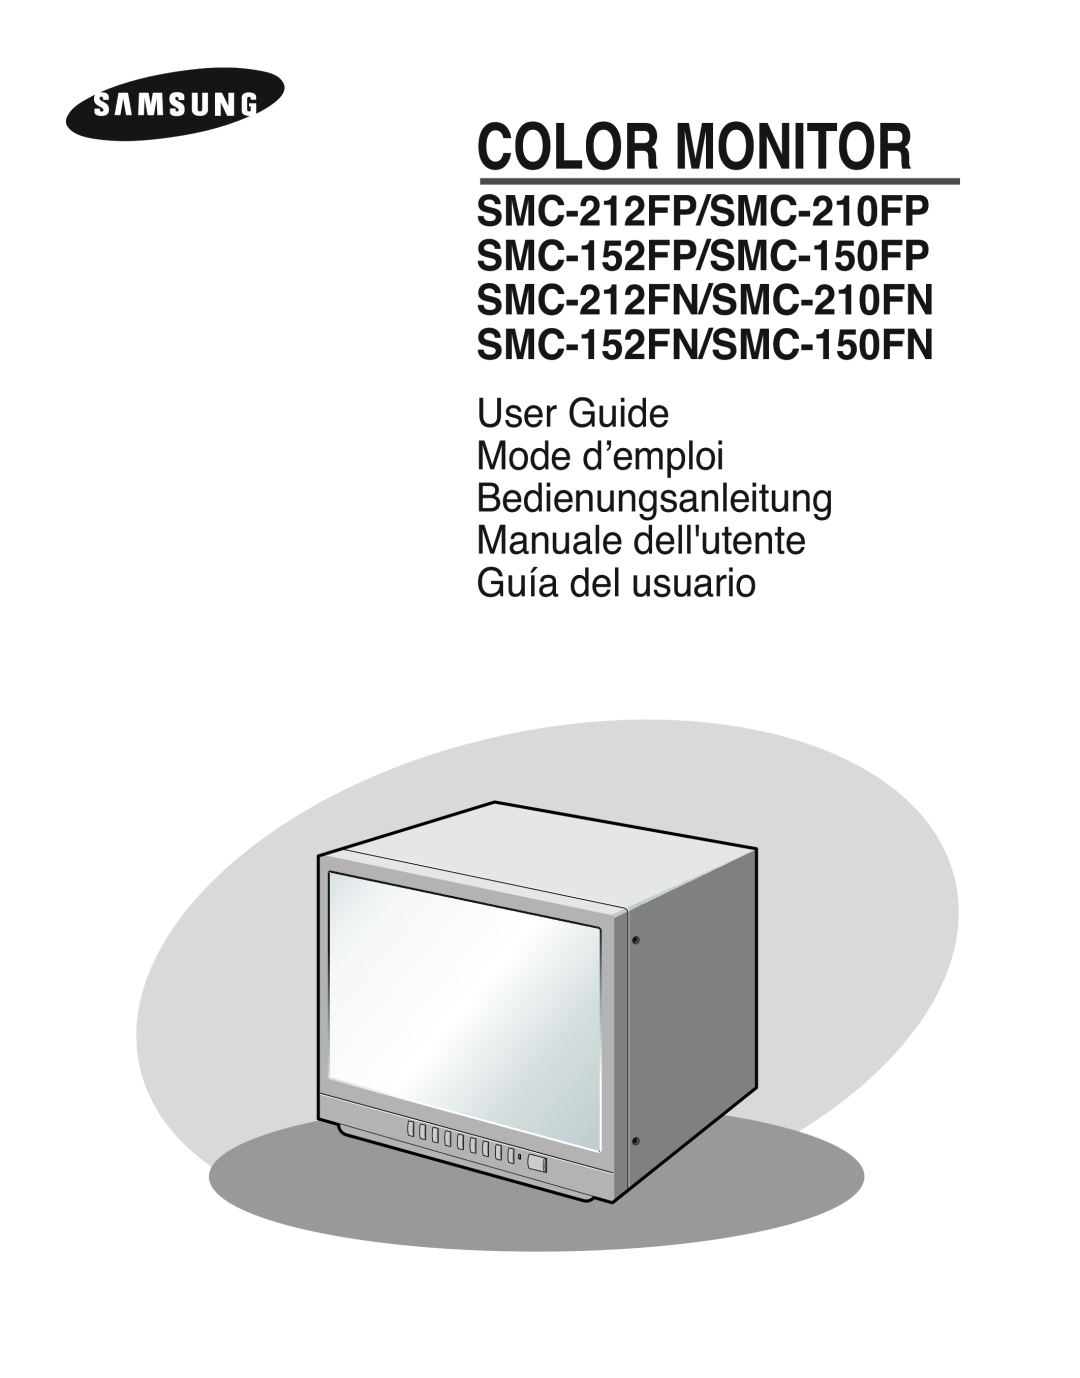 Samsung SMC-152FP manual Color Monitor, Bedienungsanleitung 